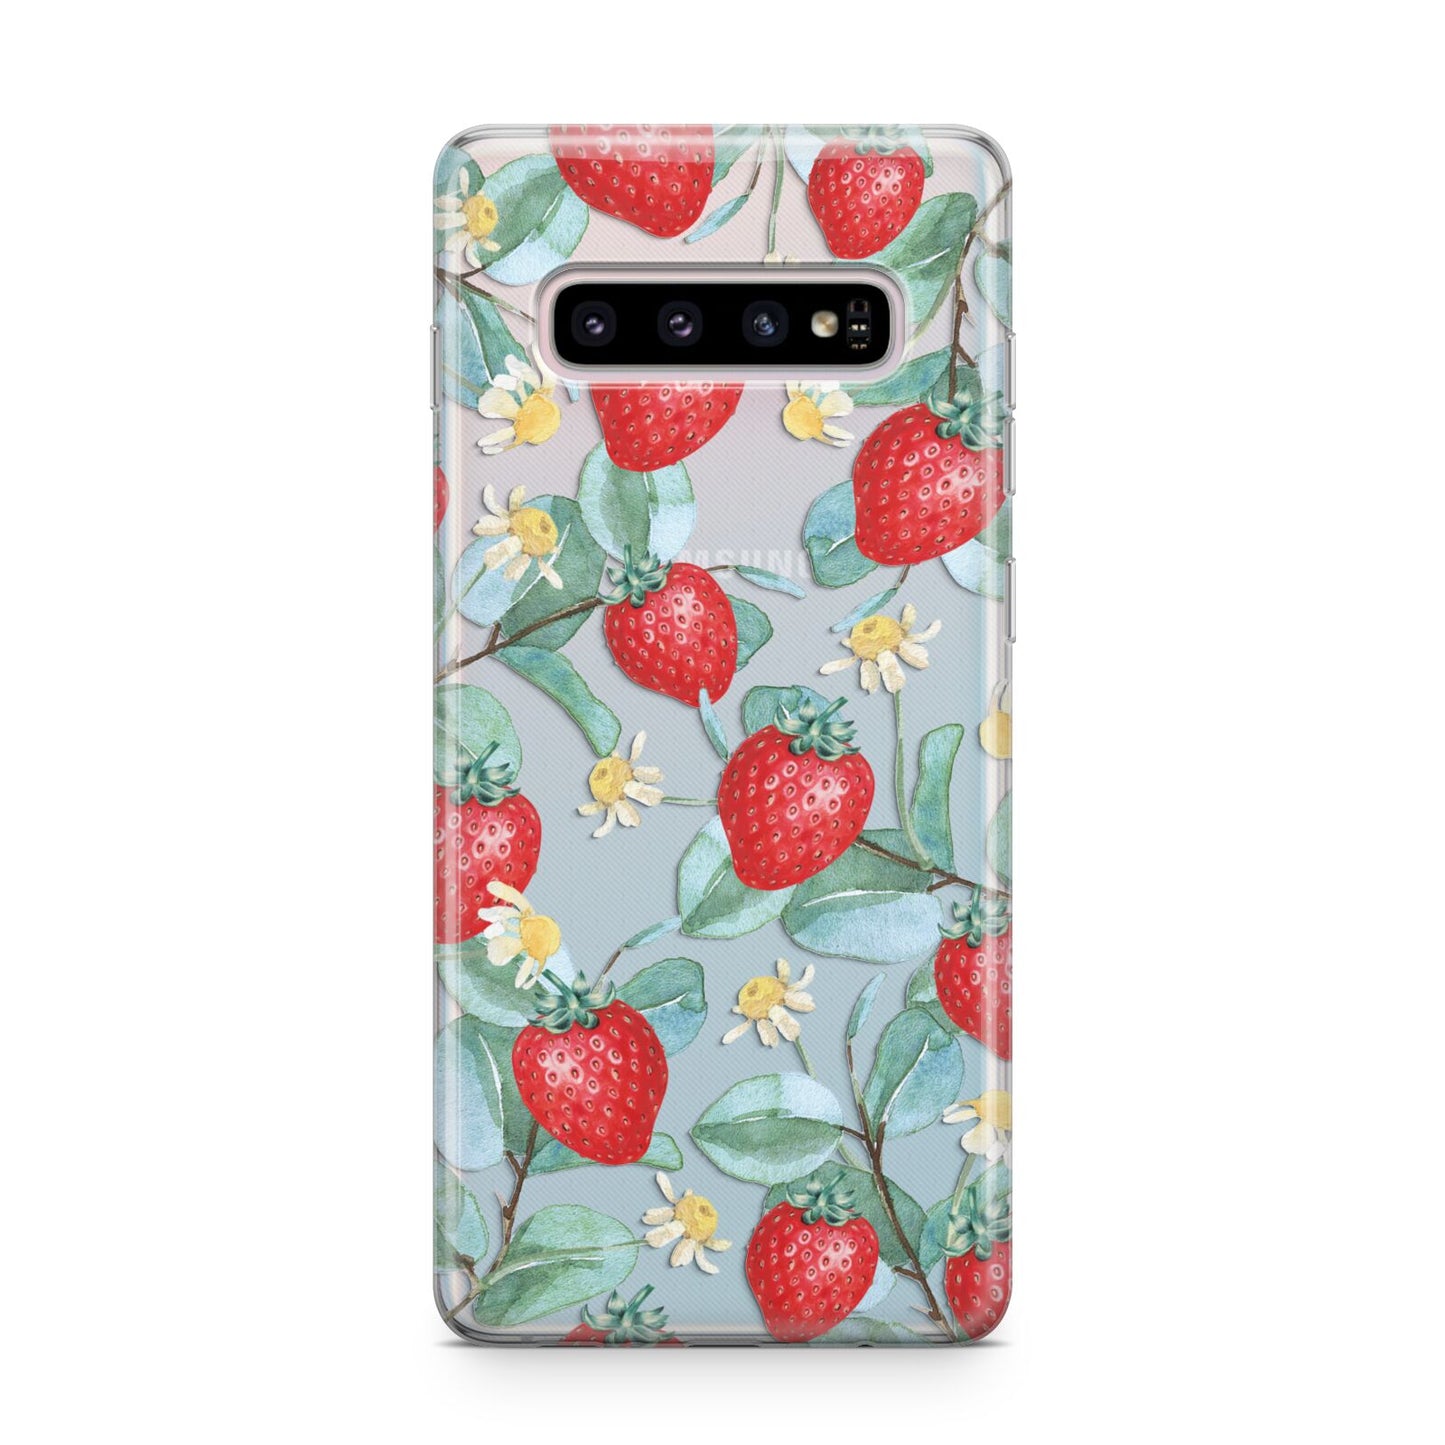 Strawberry Plant Samsung Galaxy S10 Plus Case